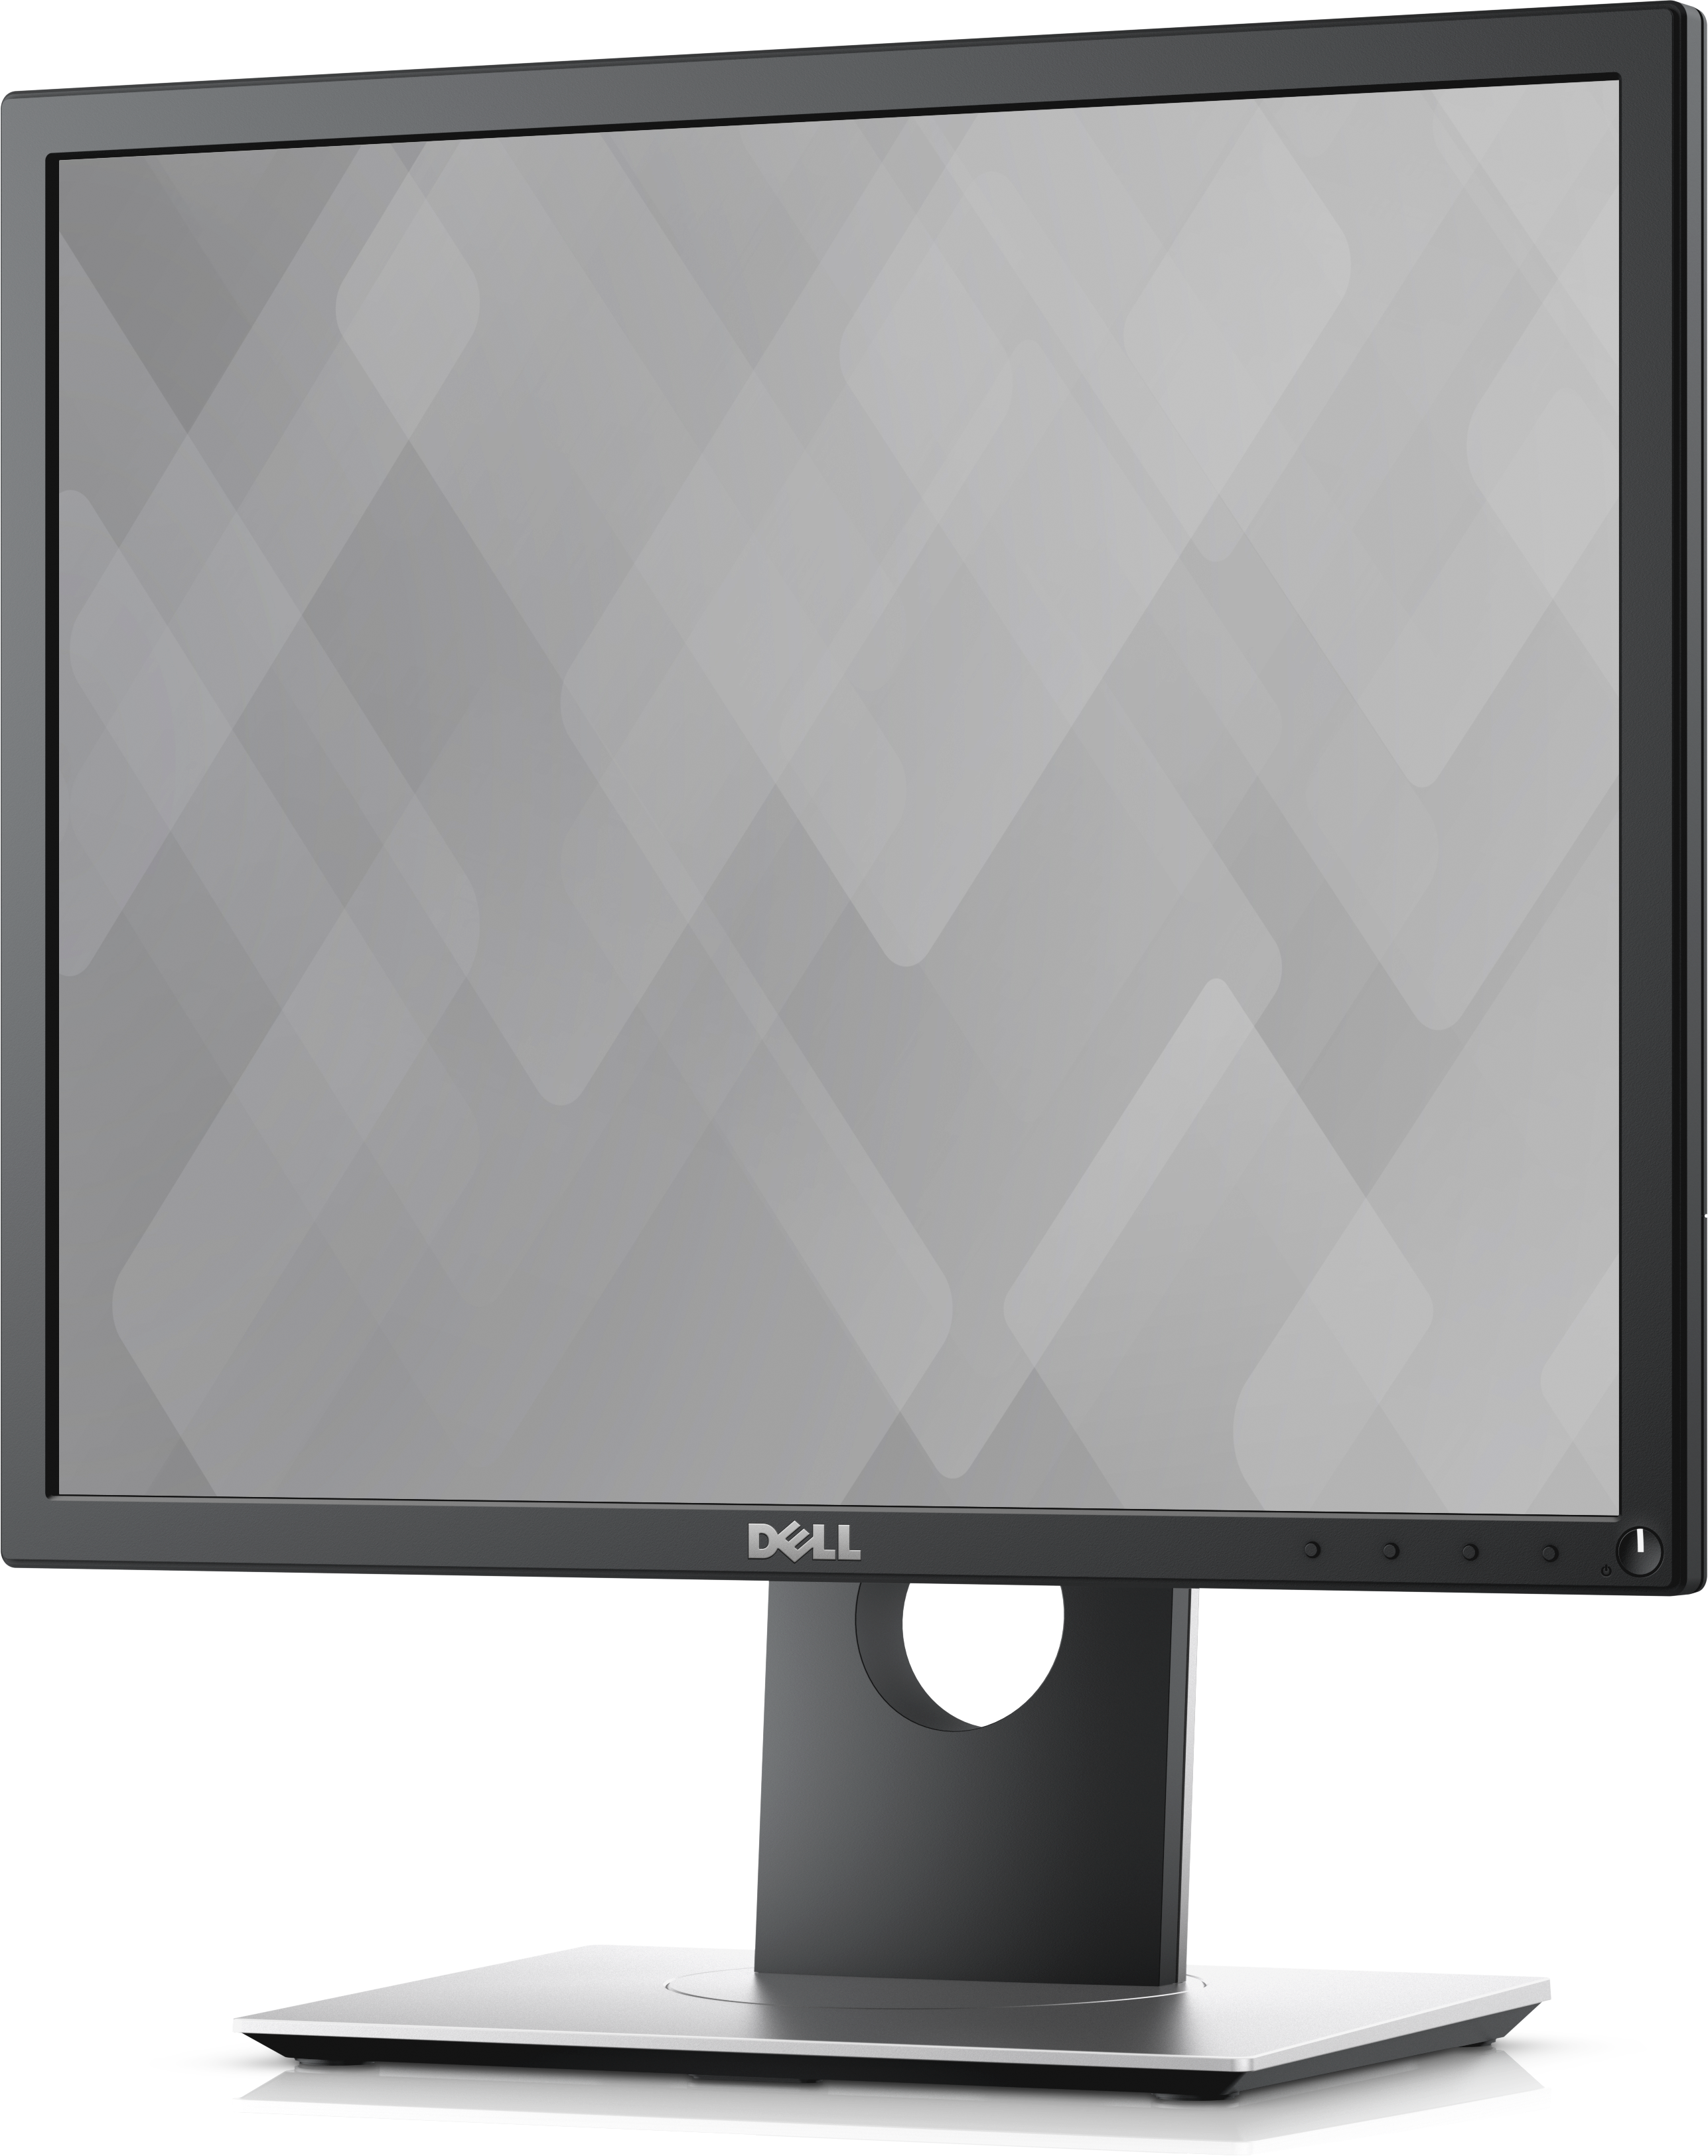 Dell 210-AJBG, 48.3 Cm (19), 1280 X 1024 Bei 60 Hz, 250 Cd/m², 6 Ms (Gray-to-Gray)